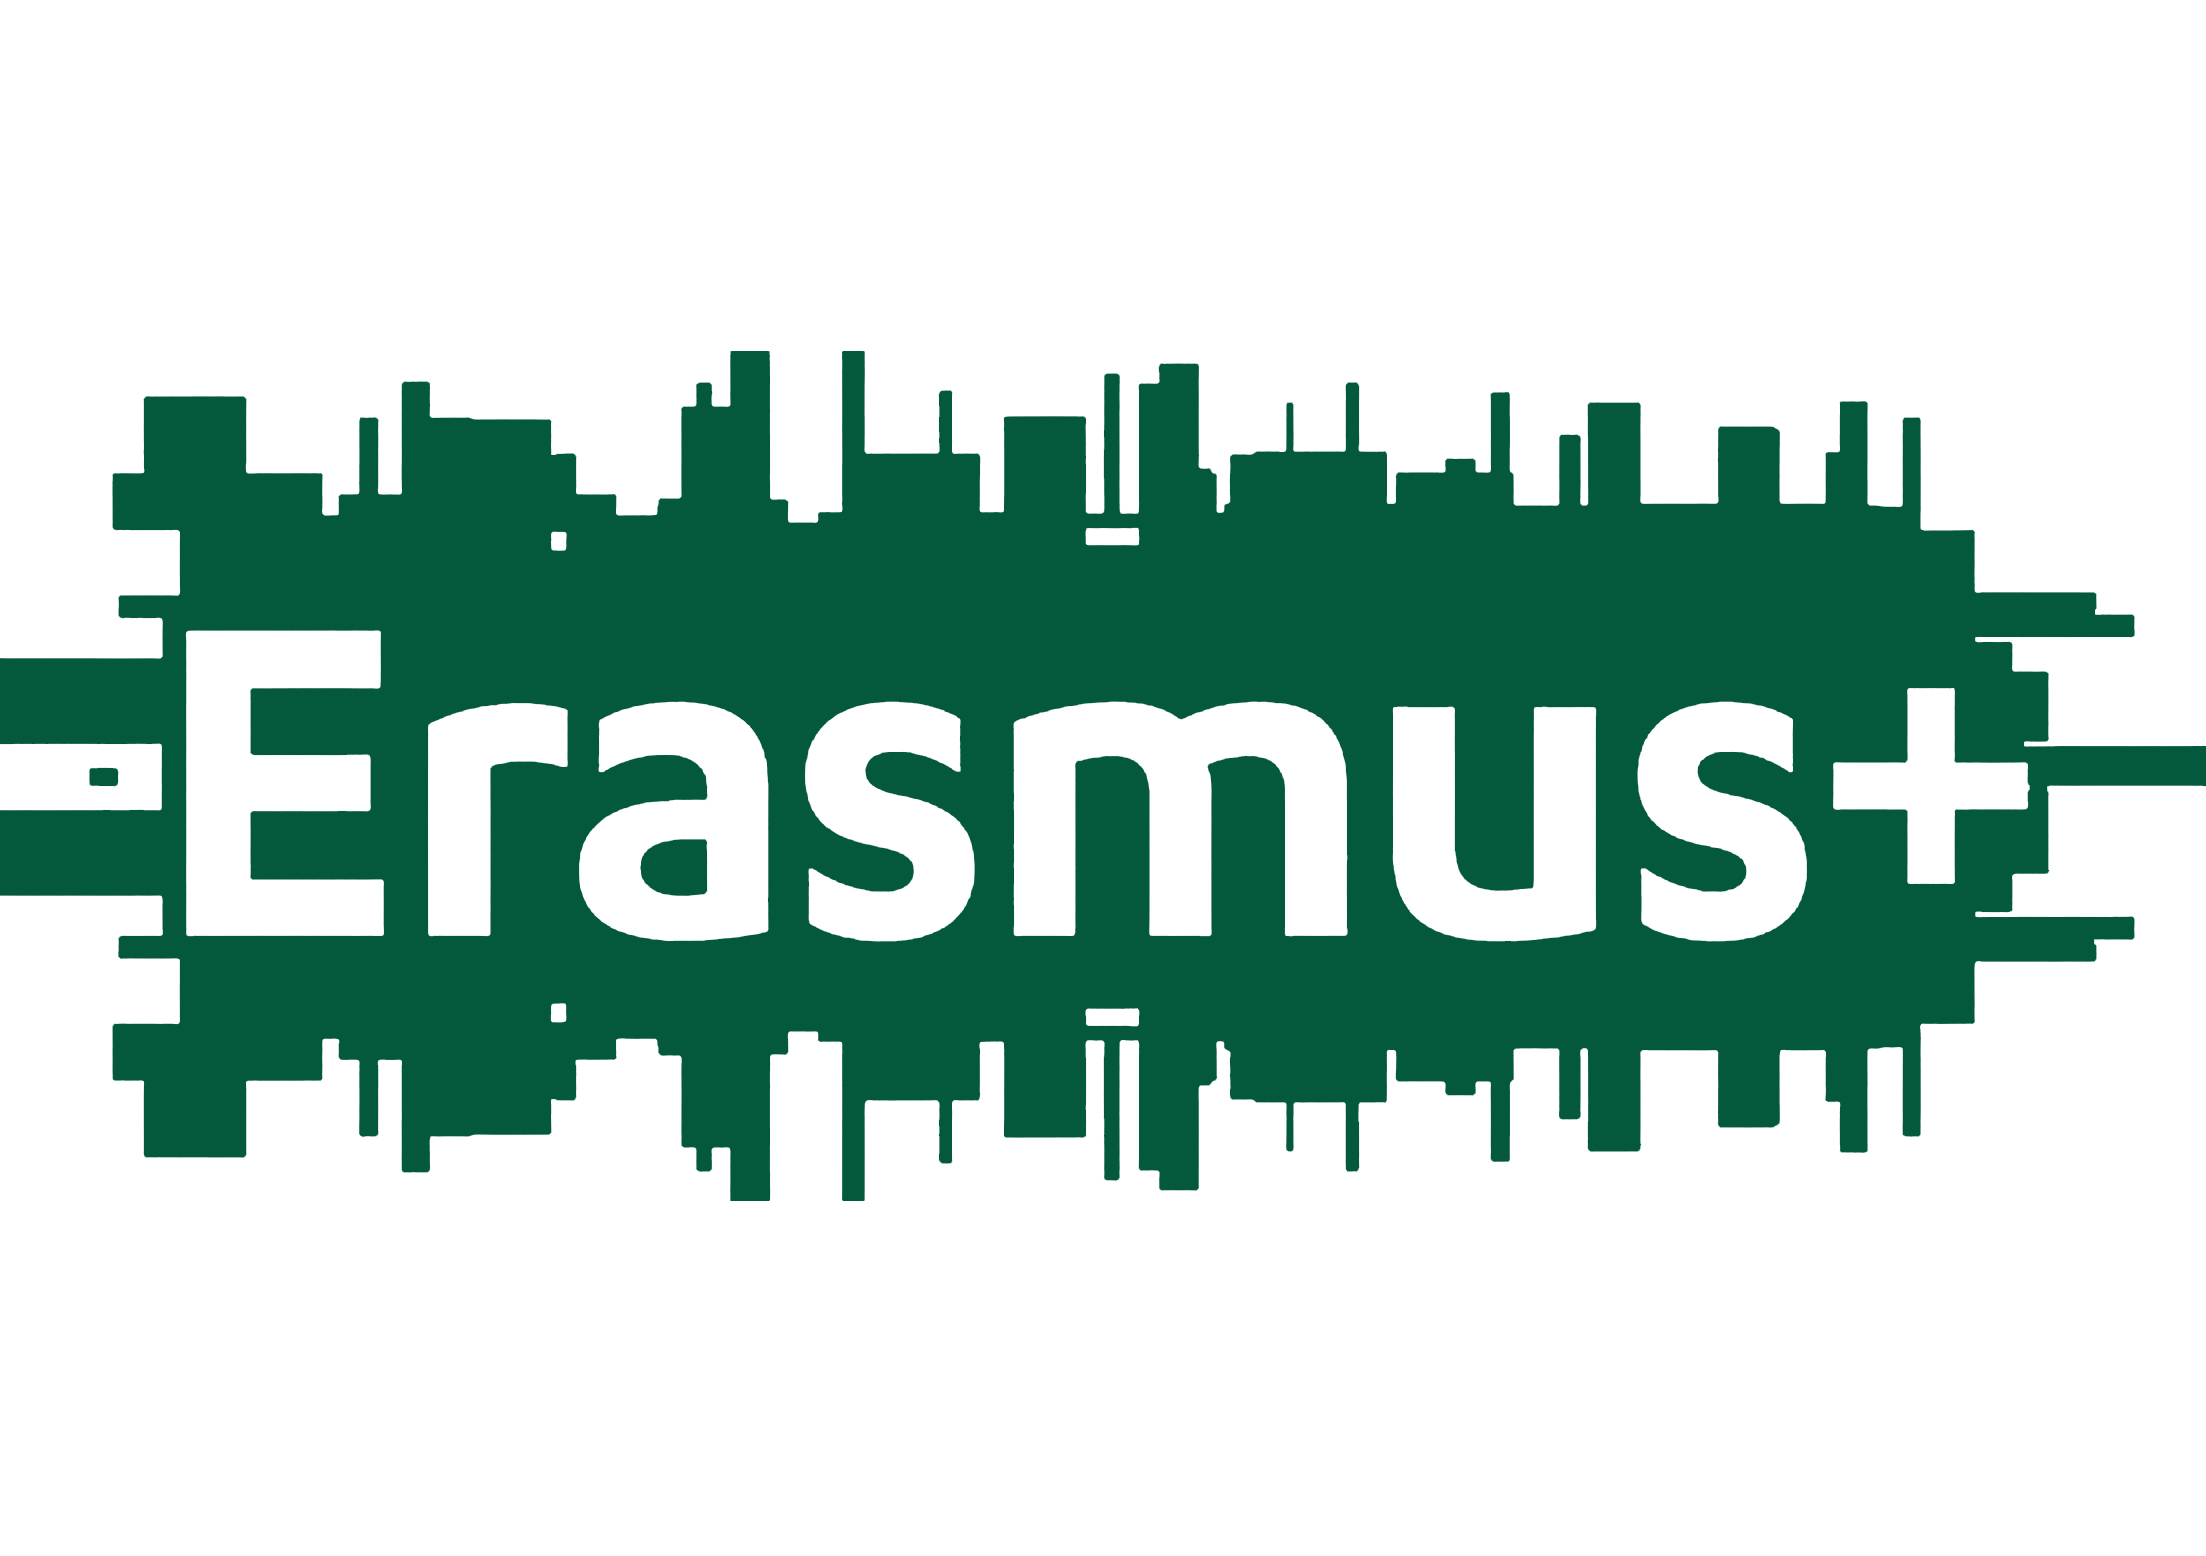 ErasmusLogo